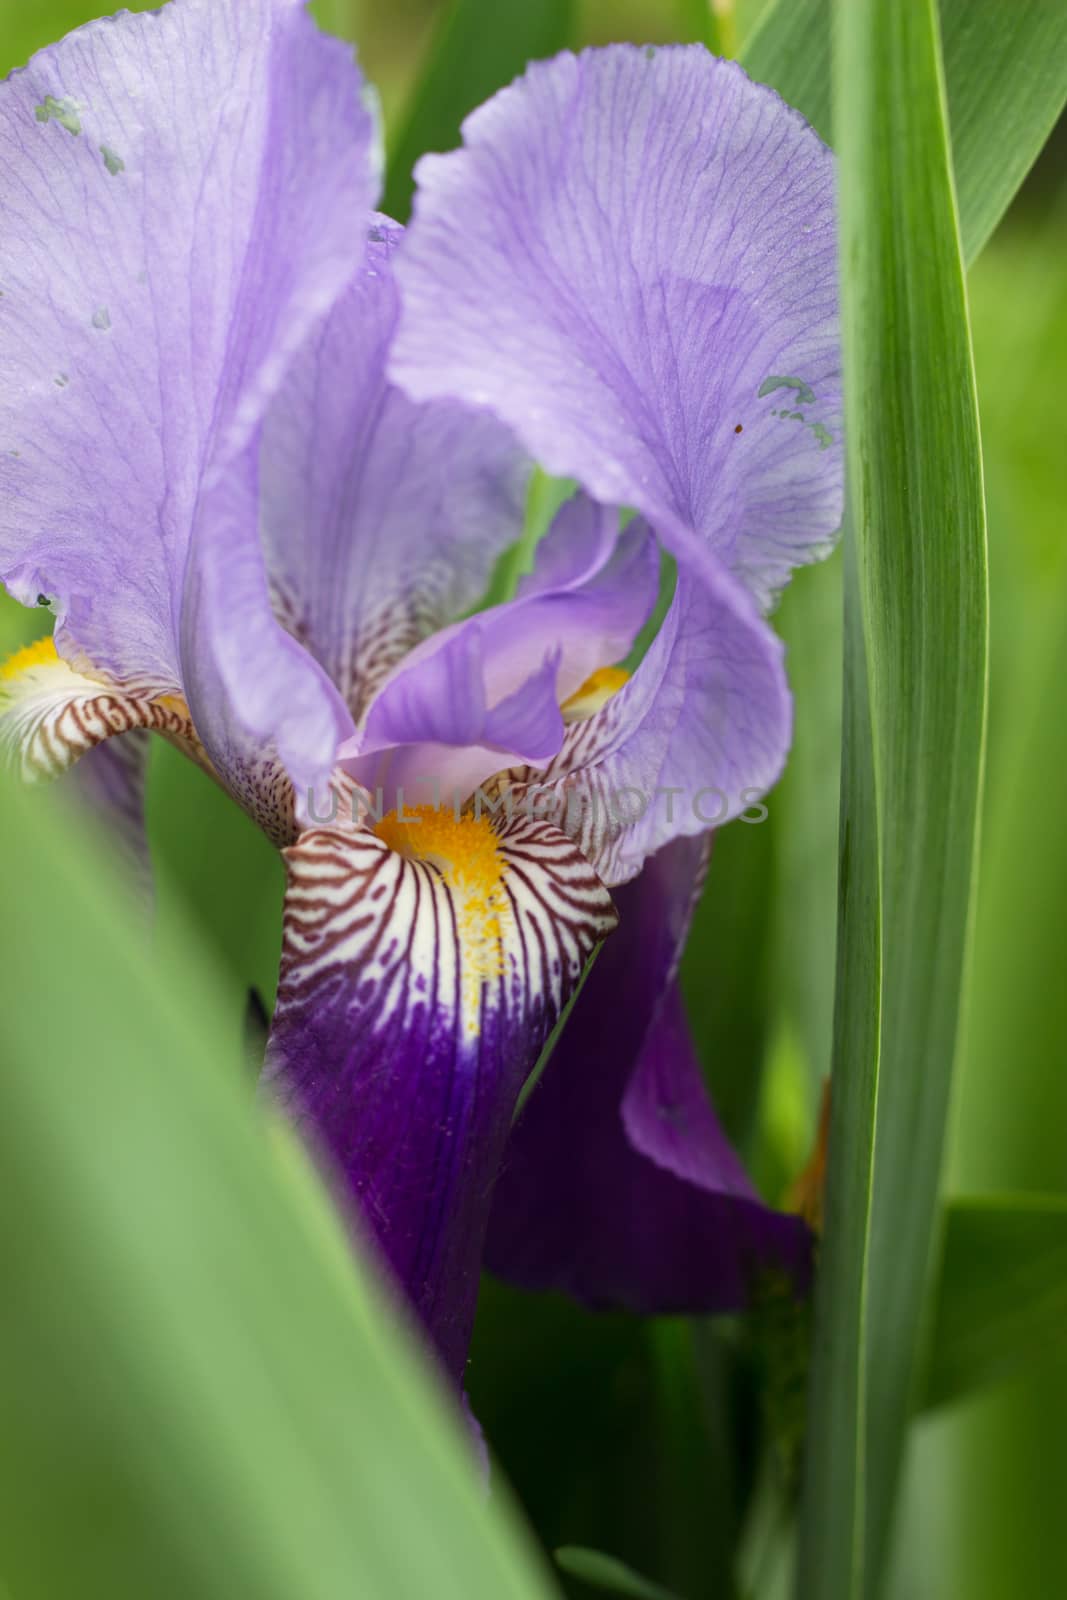 Violet iris flower by Mima_Key